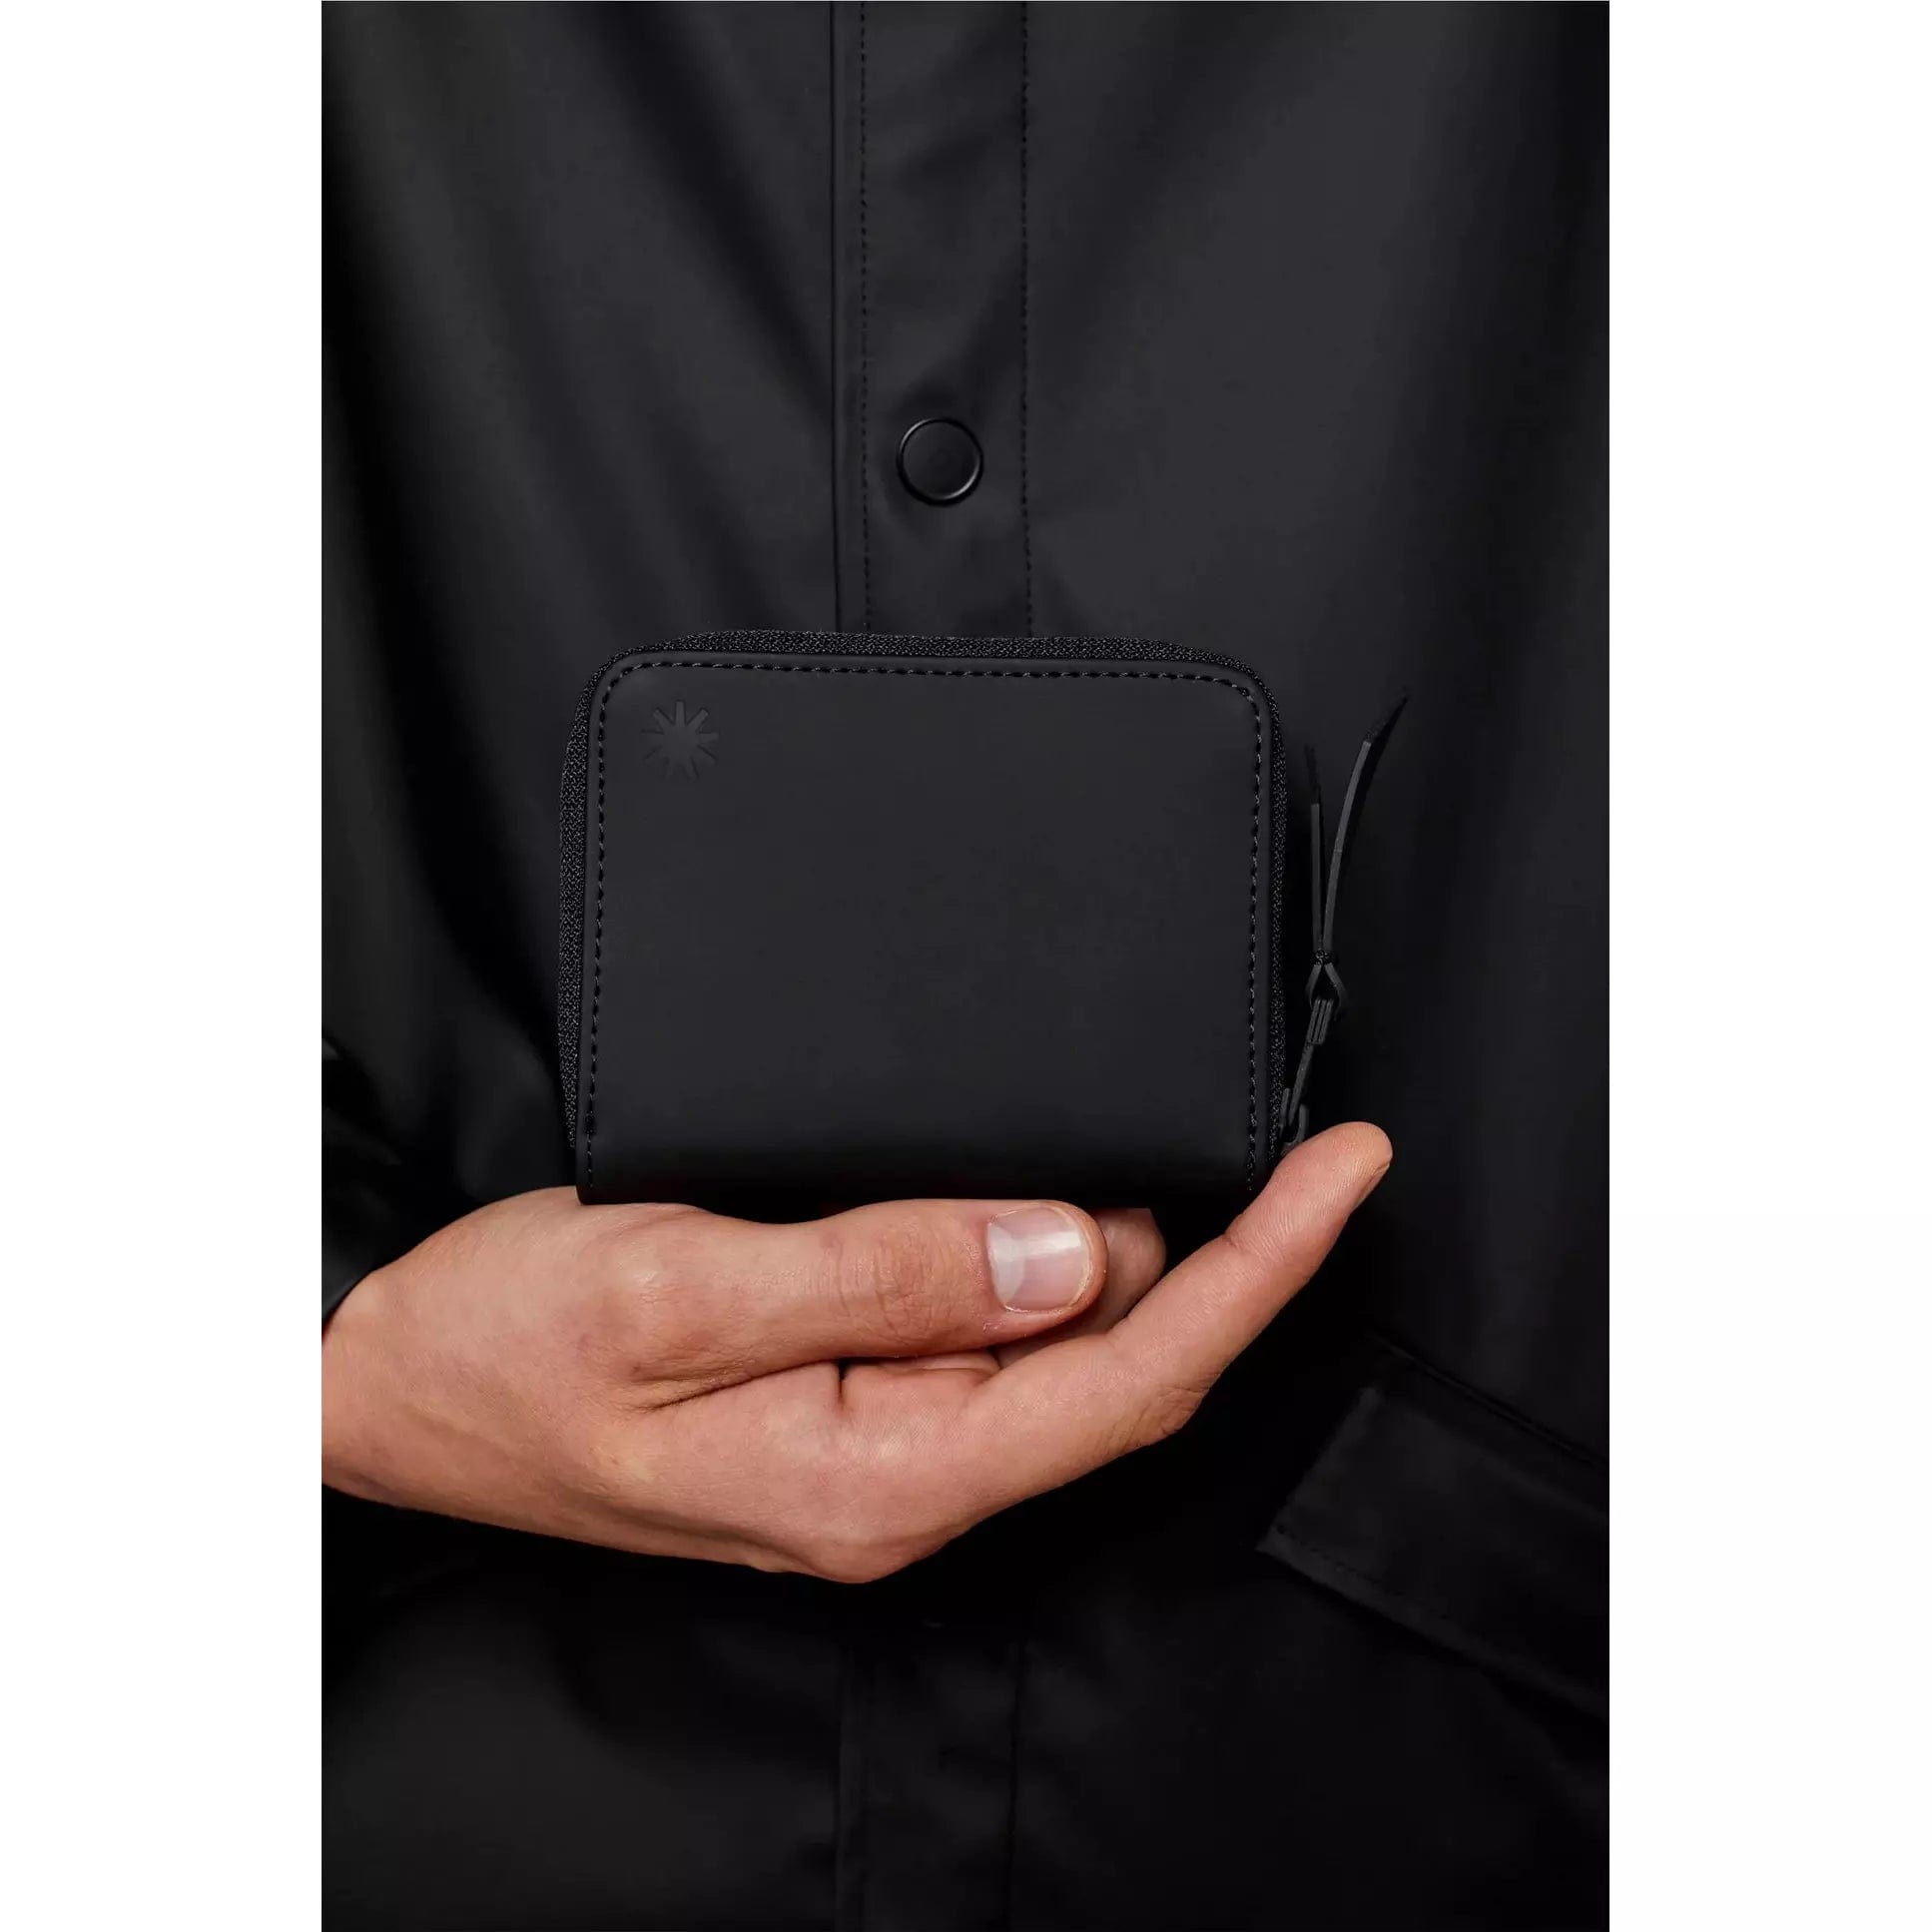 RAINS Wallets & Money Clips H3.5 x W4.3 x D0.8 inches / Black / Polyester RAINS Wallet Mini